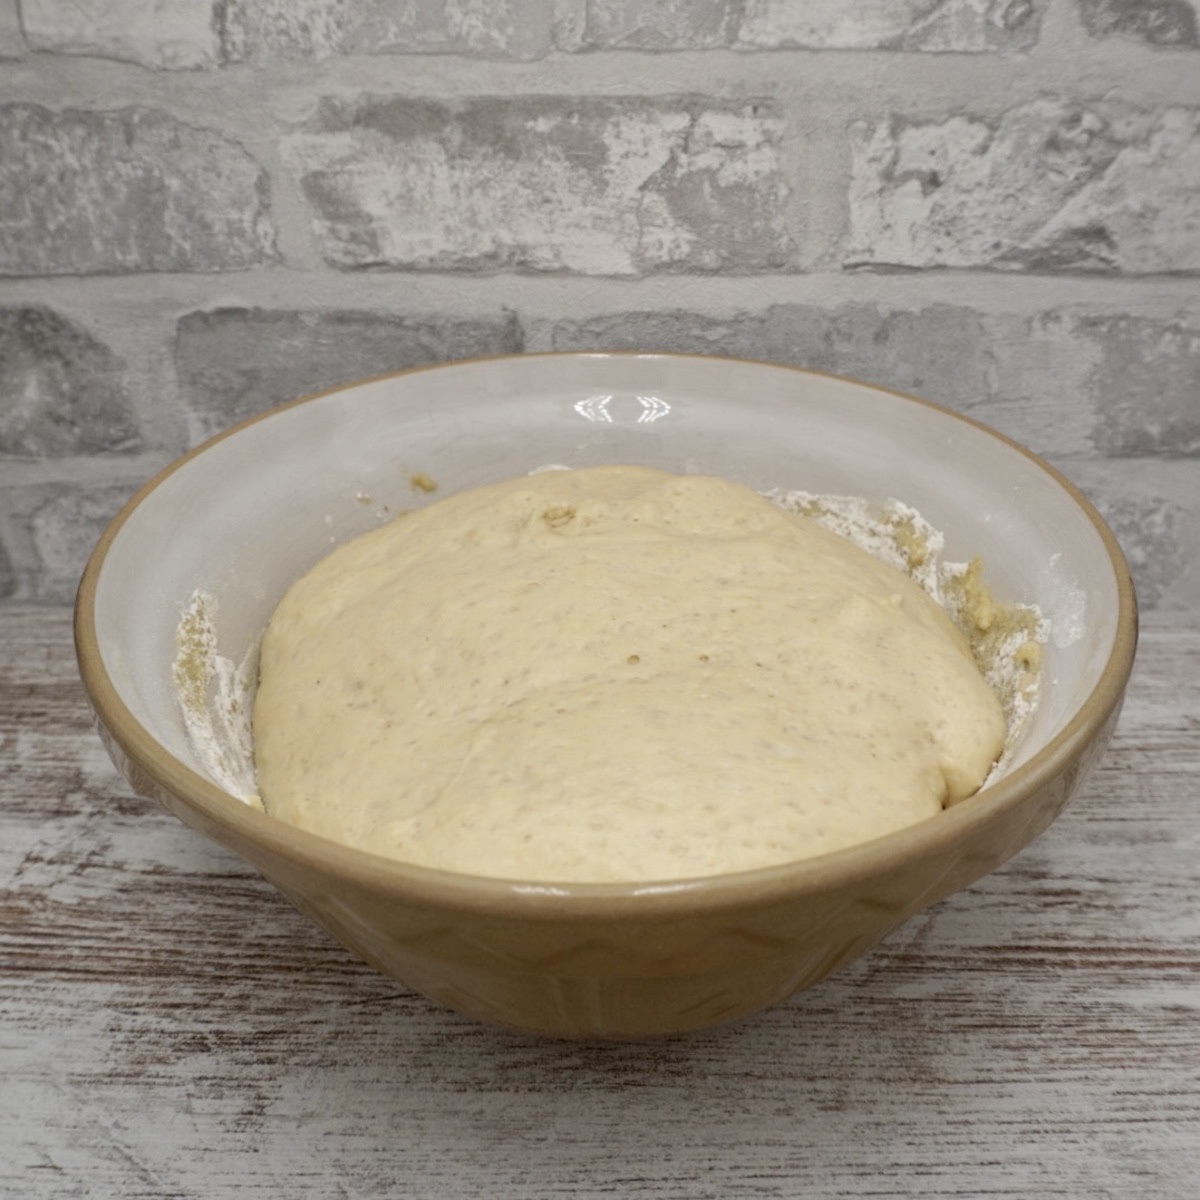 Bread dough proving in a bowl